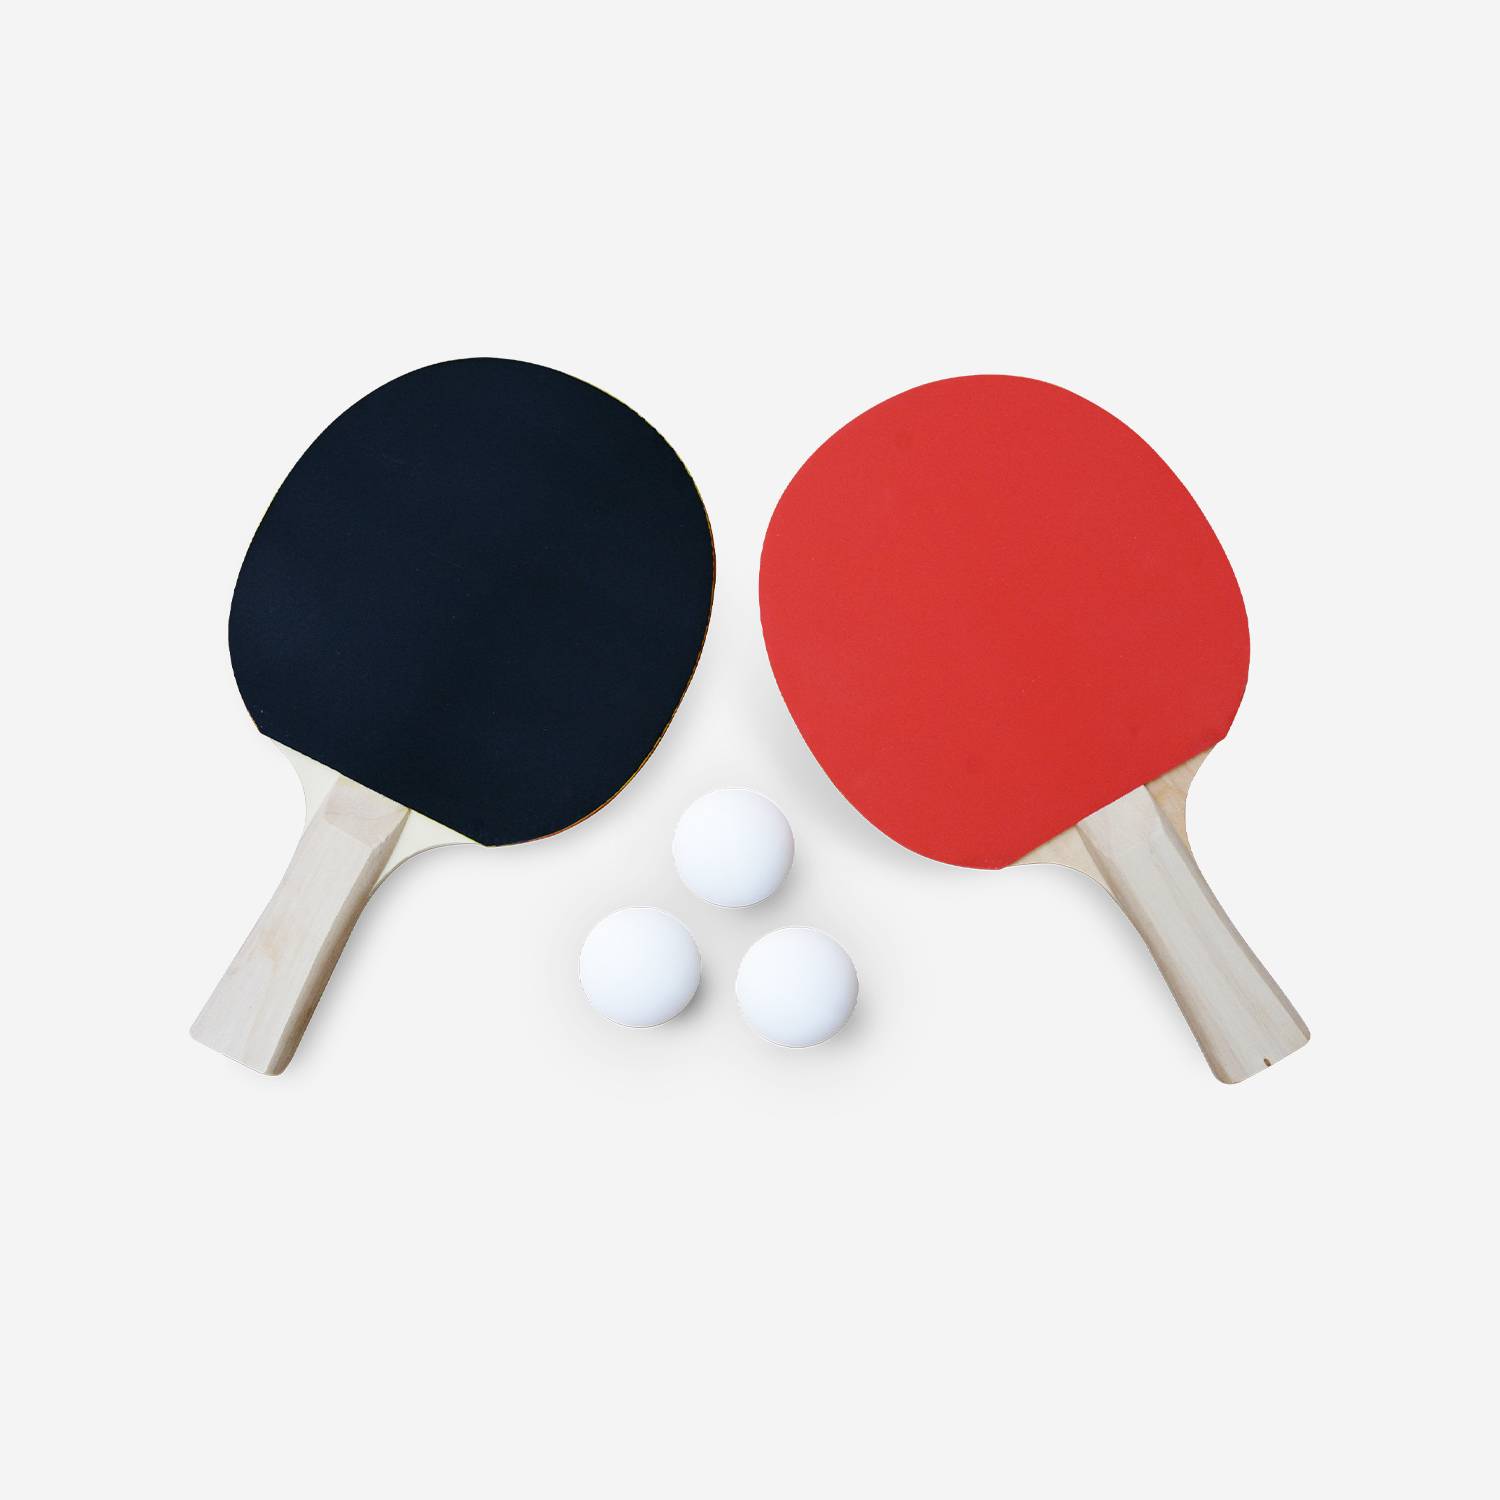 Conjunto de 2 tacos e 3 bolas para ténis de mesa Photo1